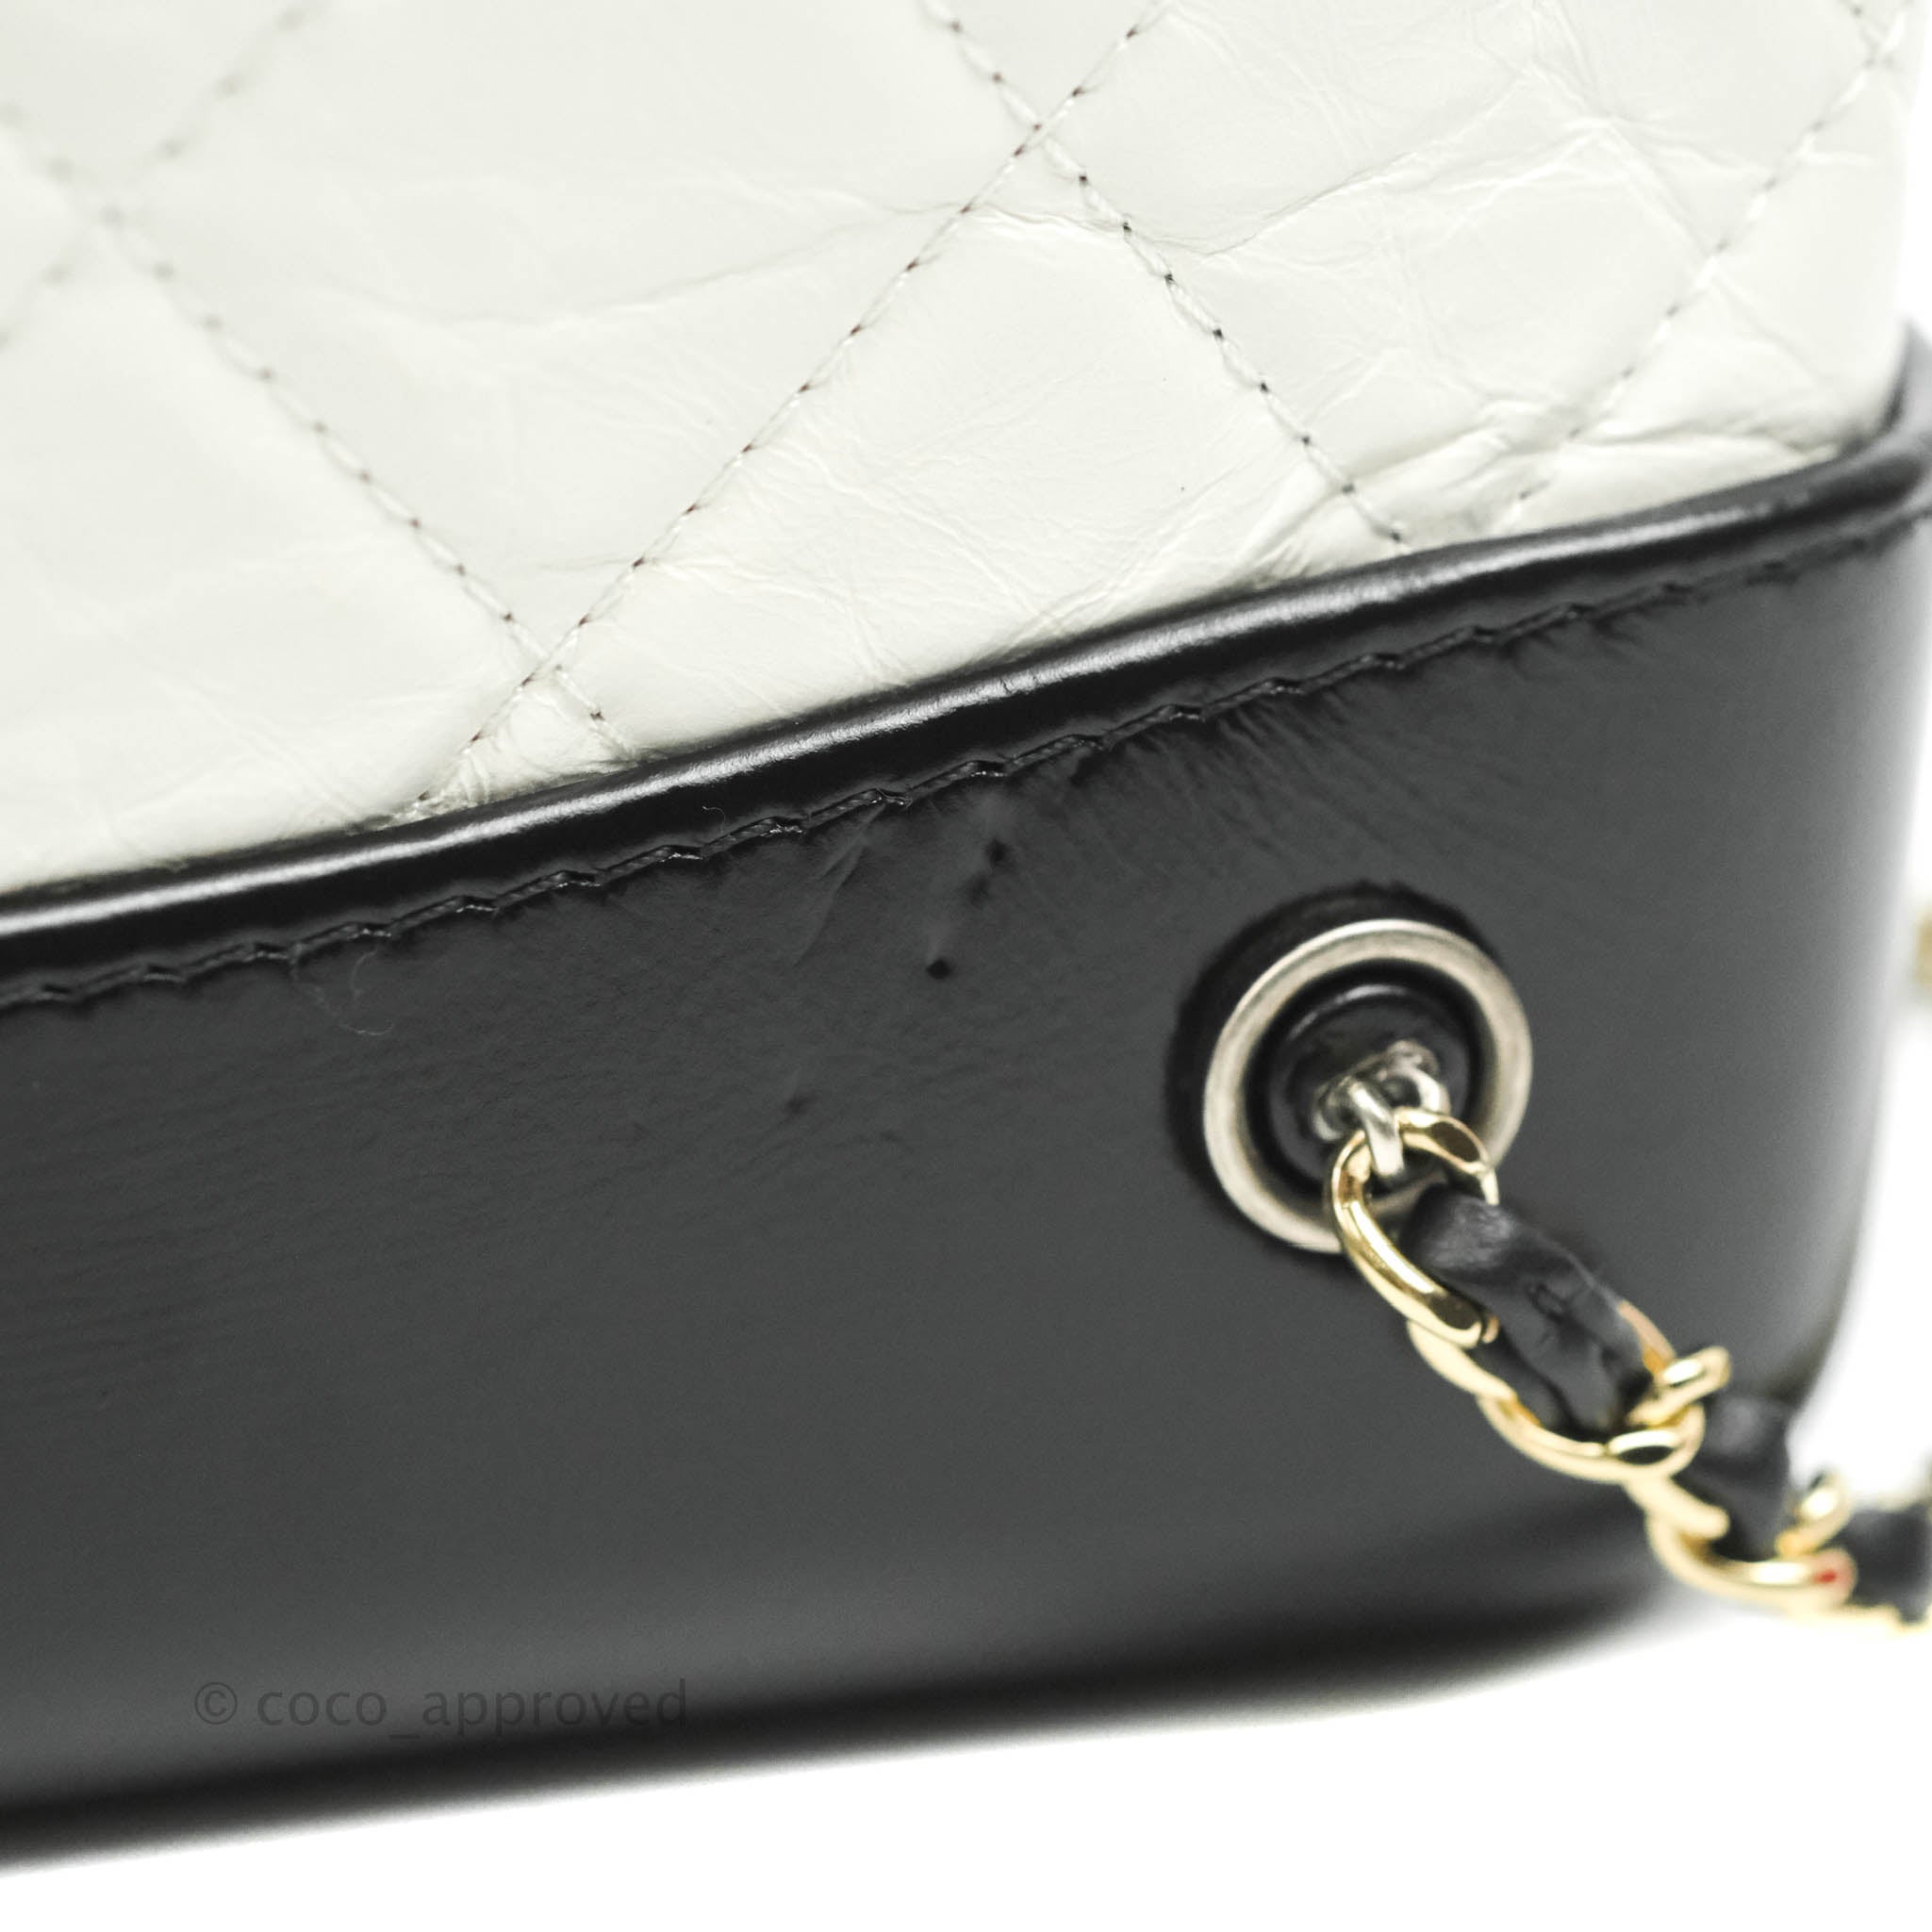 Chanel Small Gabrielle Backpack - Neutrals Backpacks, Handbags - CHA963482